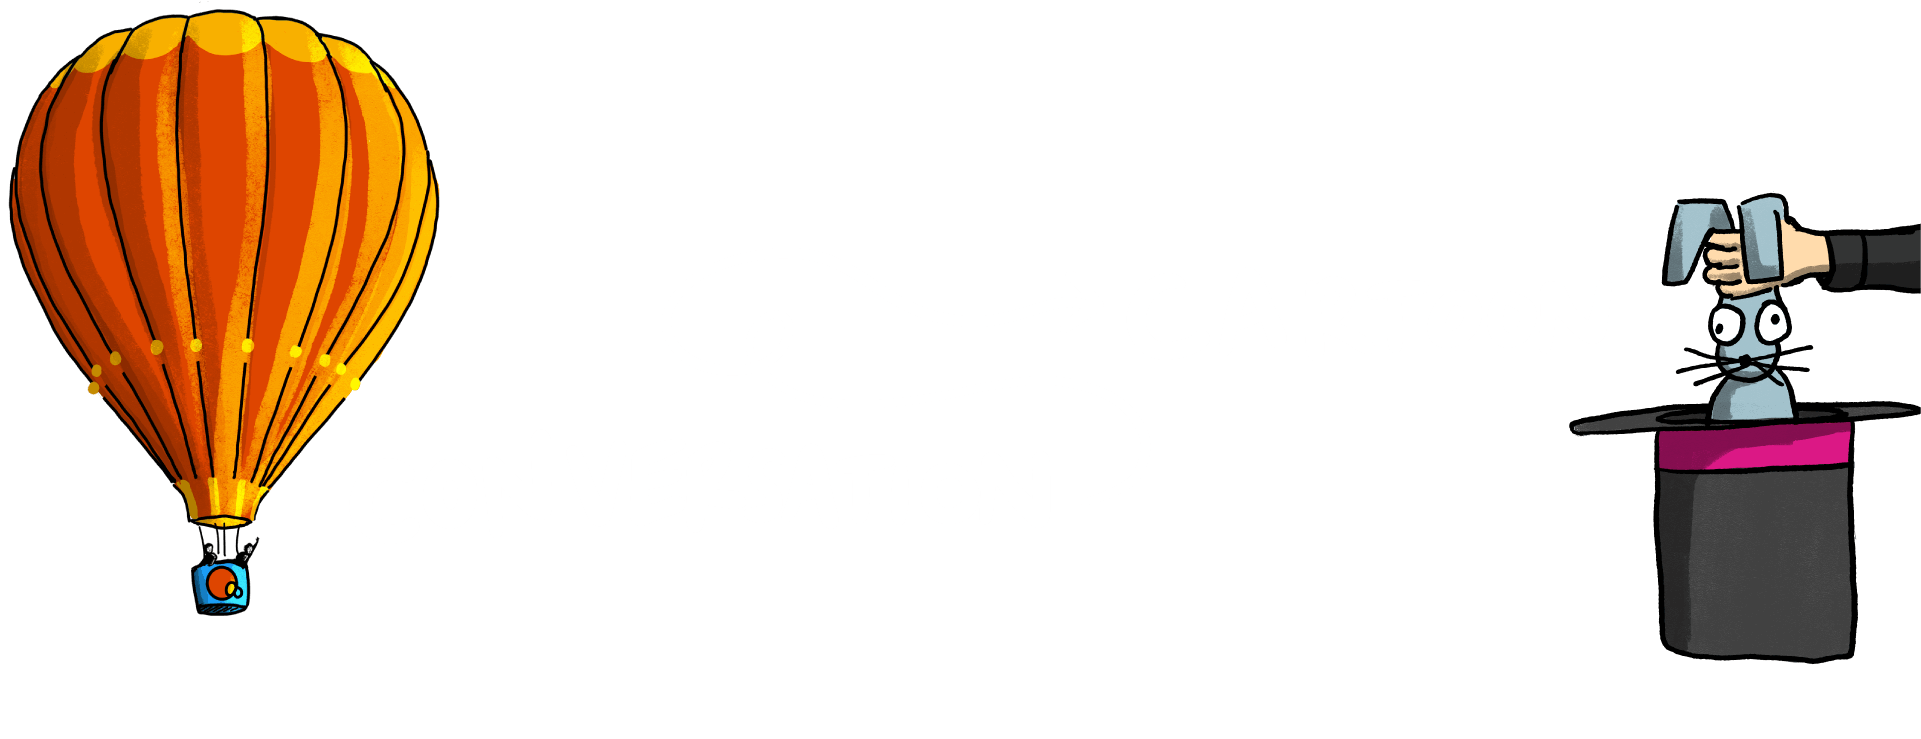 Conversations to cartoons